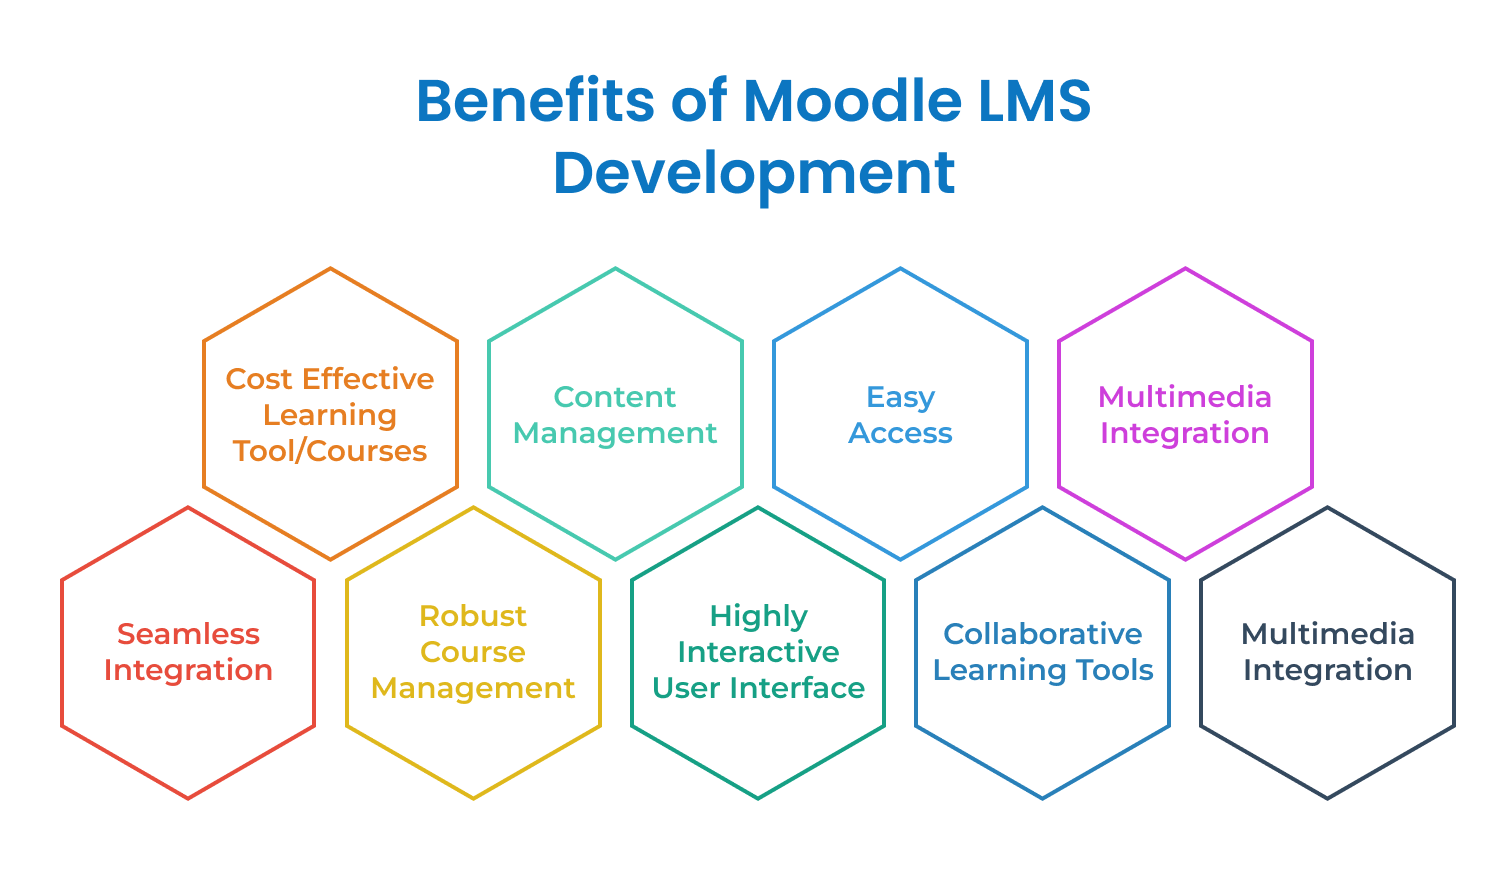 Benefits of Moodle LMS Development